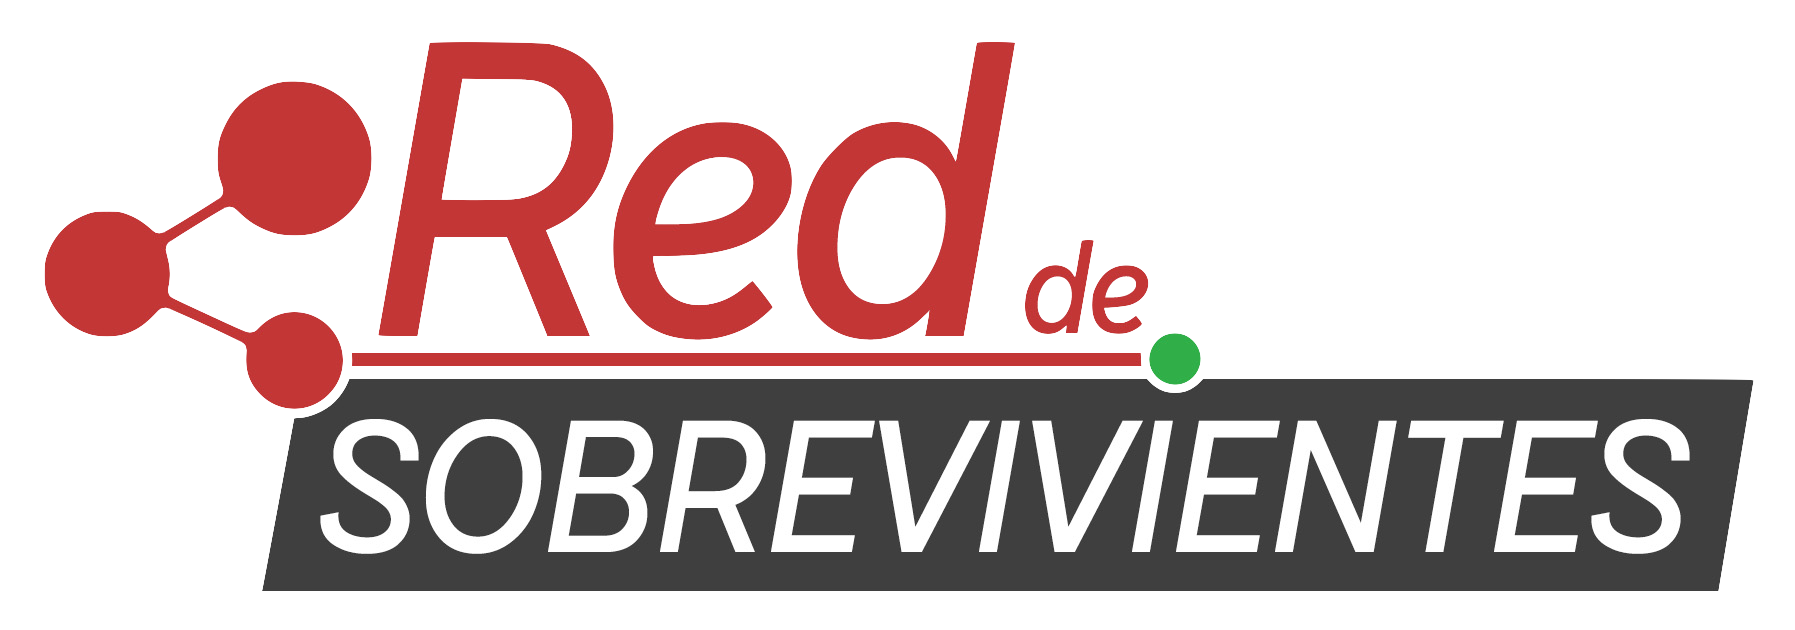 Logo Red.png